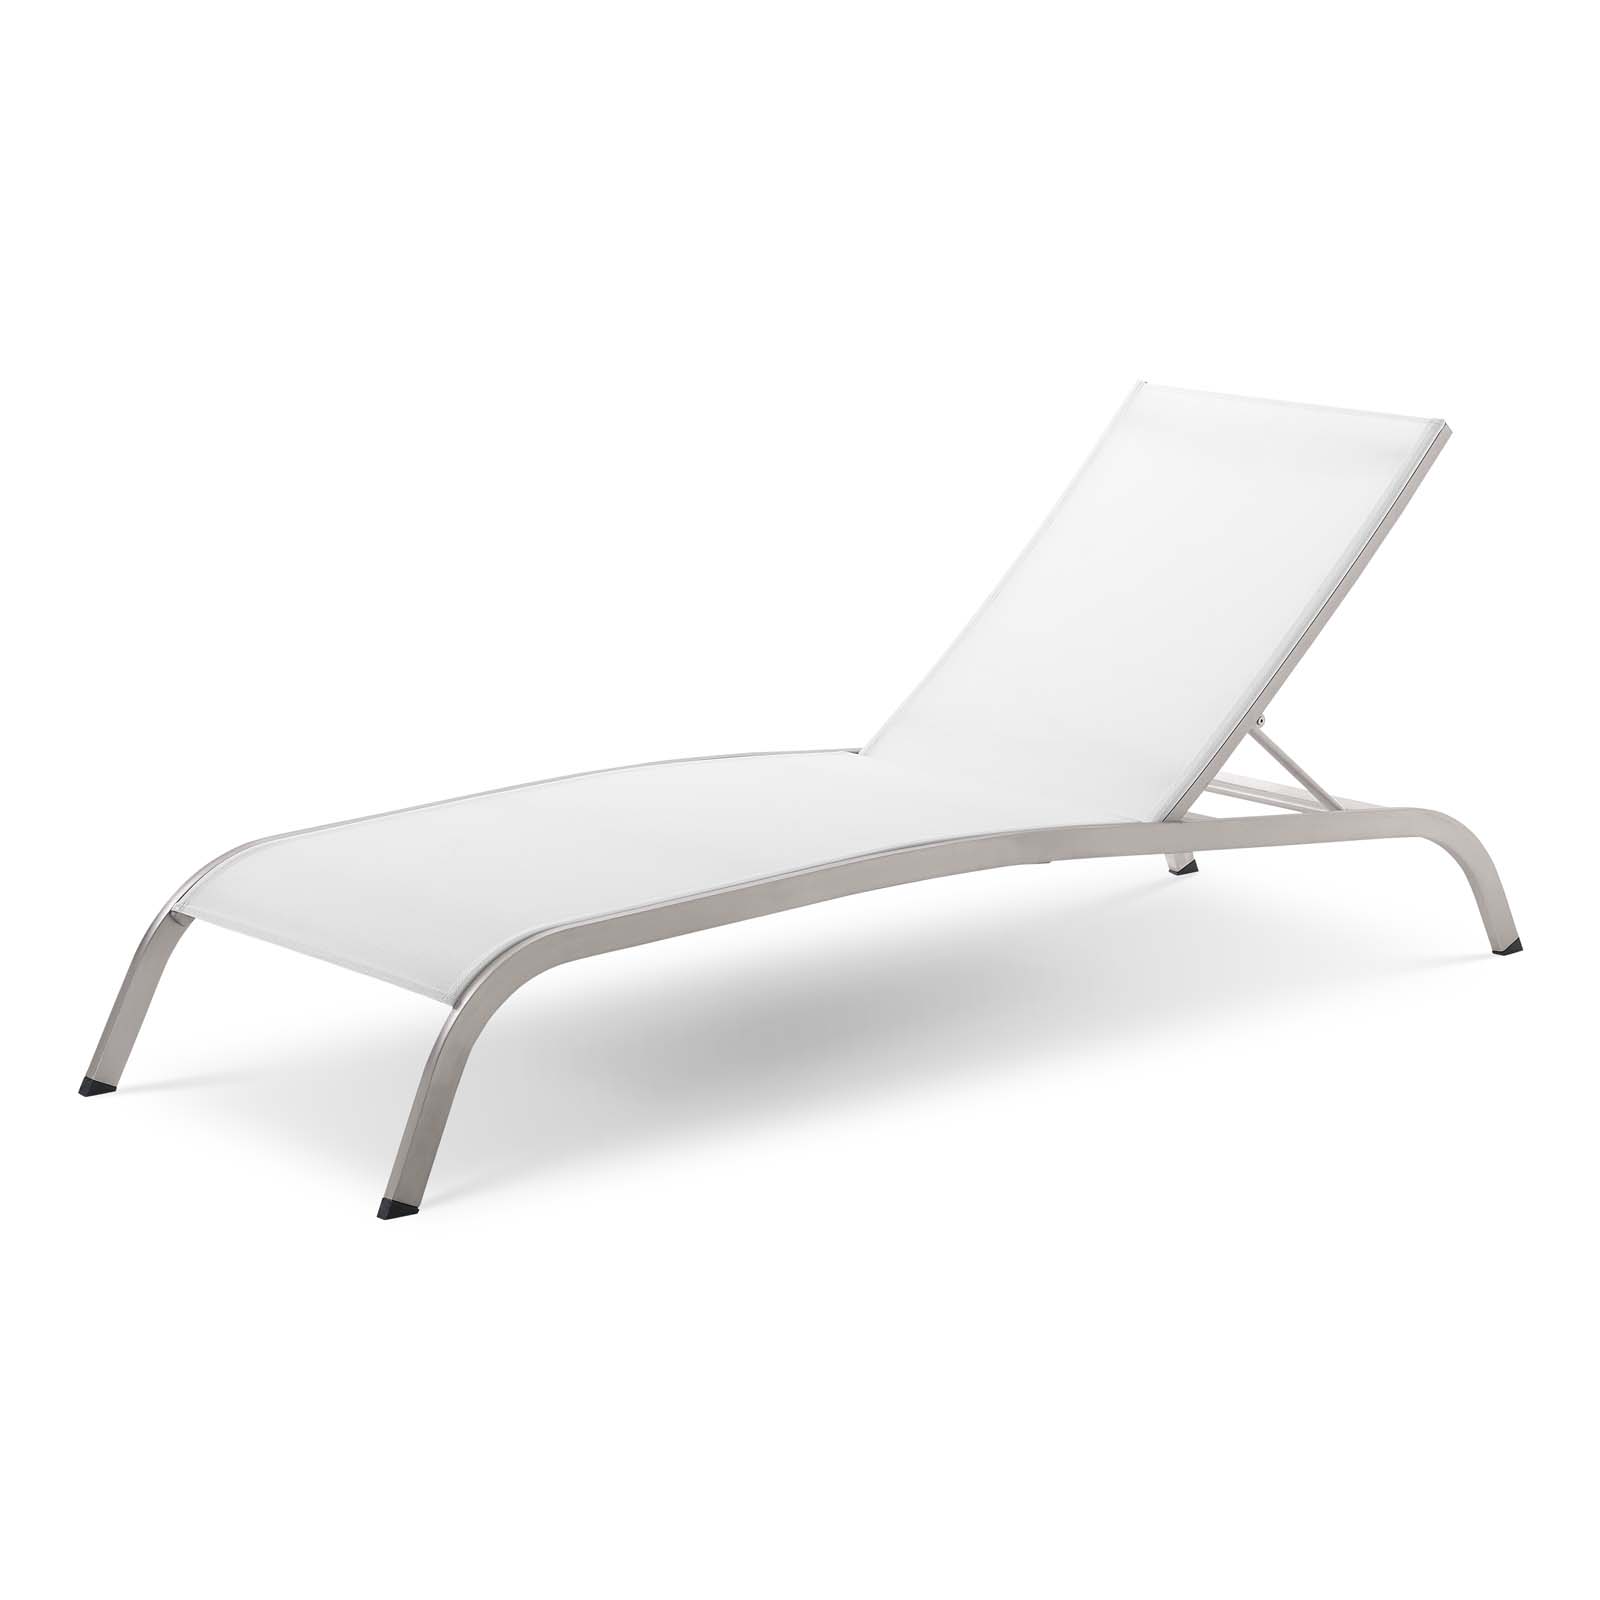 Contemporary Modern Urban Designer Outdoor Patio Balcony Garden Furniture Lounge Lounge Chair, Aluminum, White - image 1 of 6